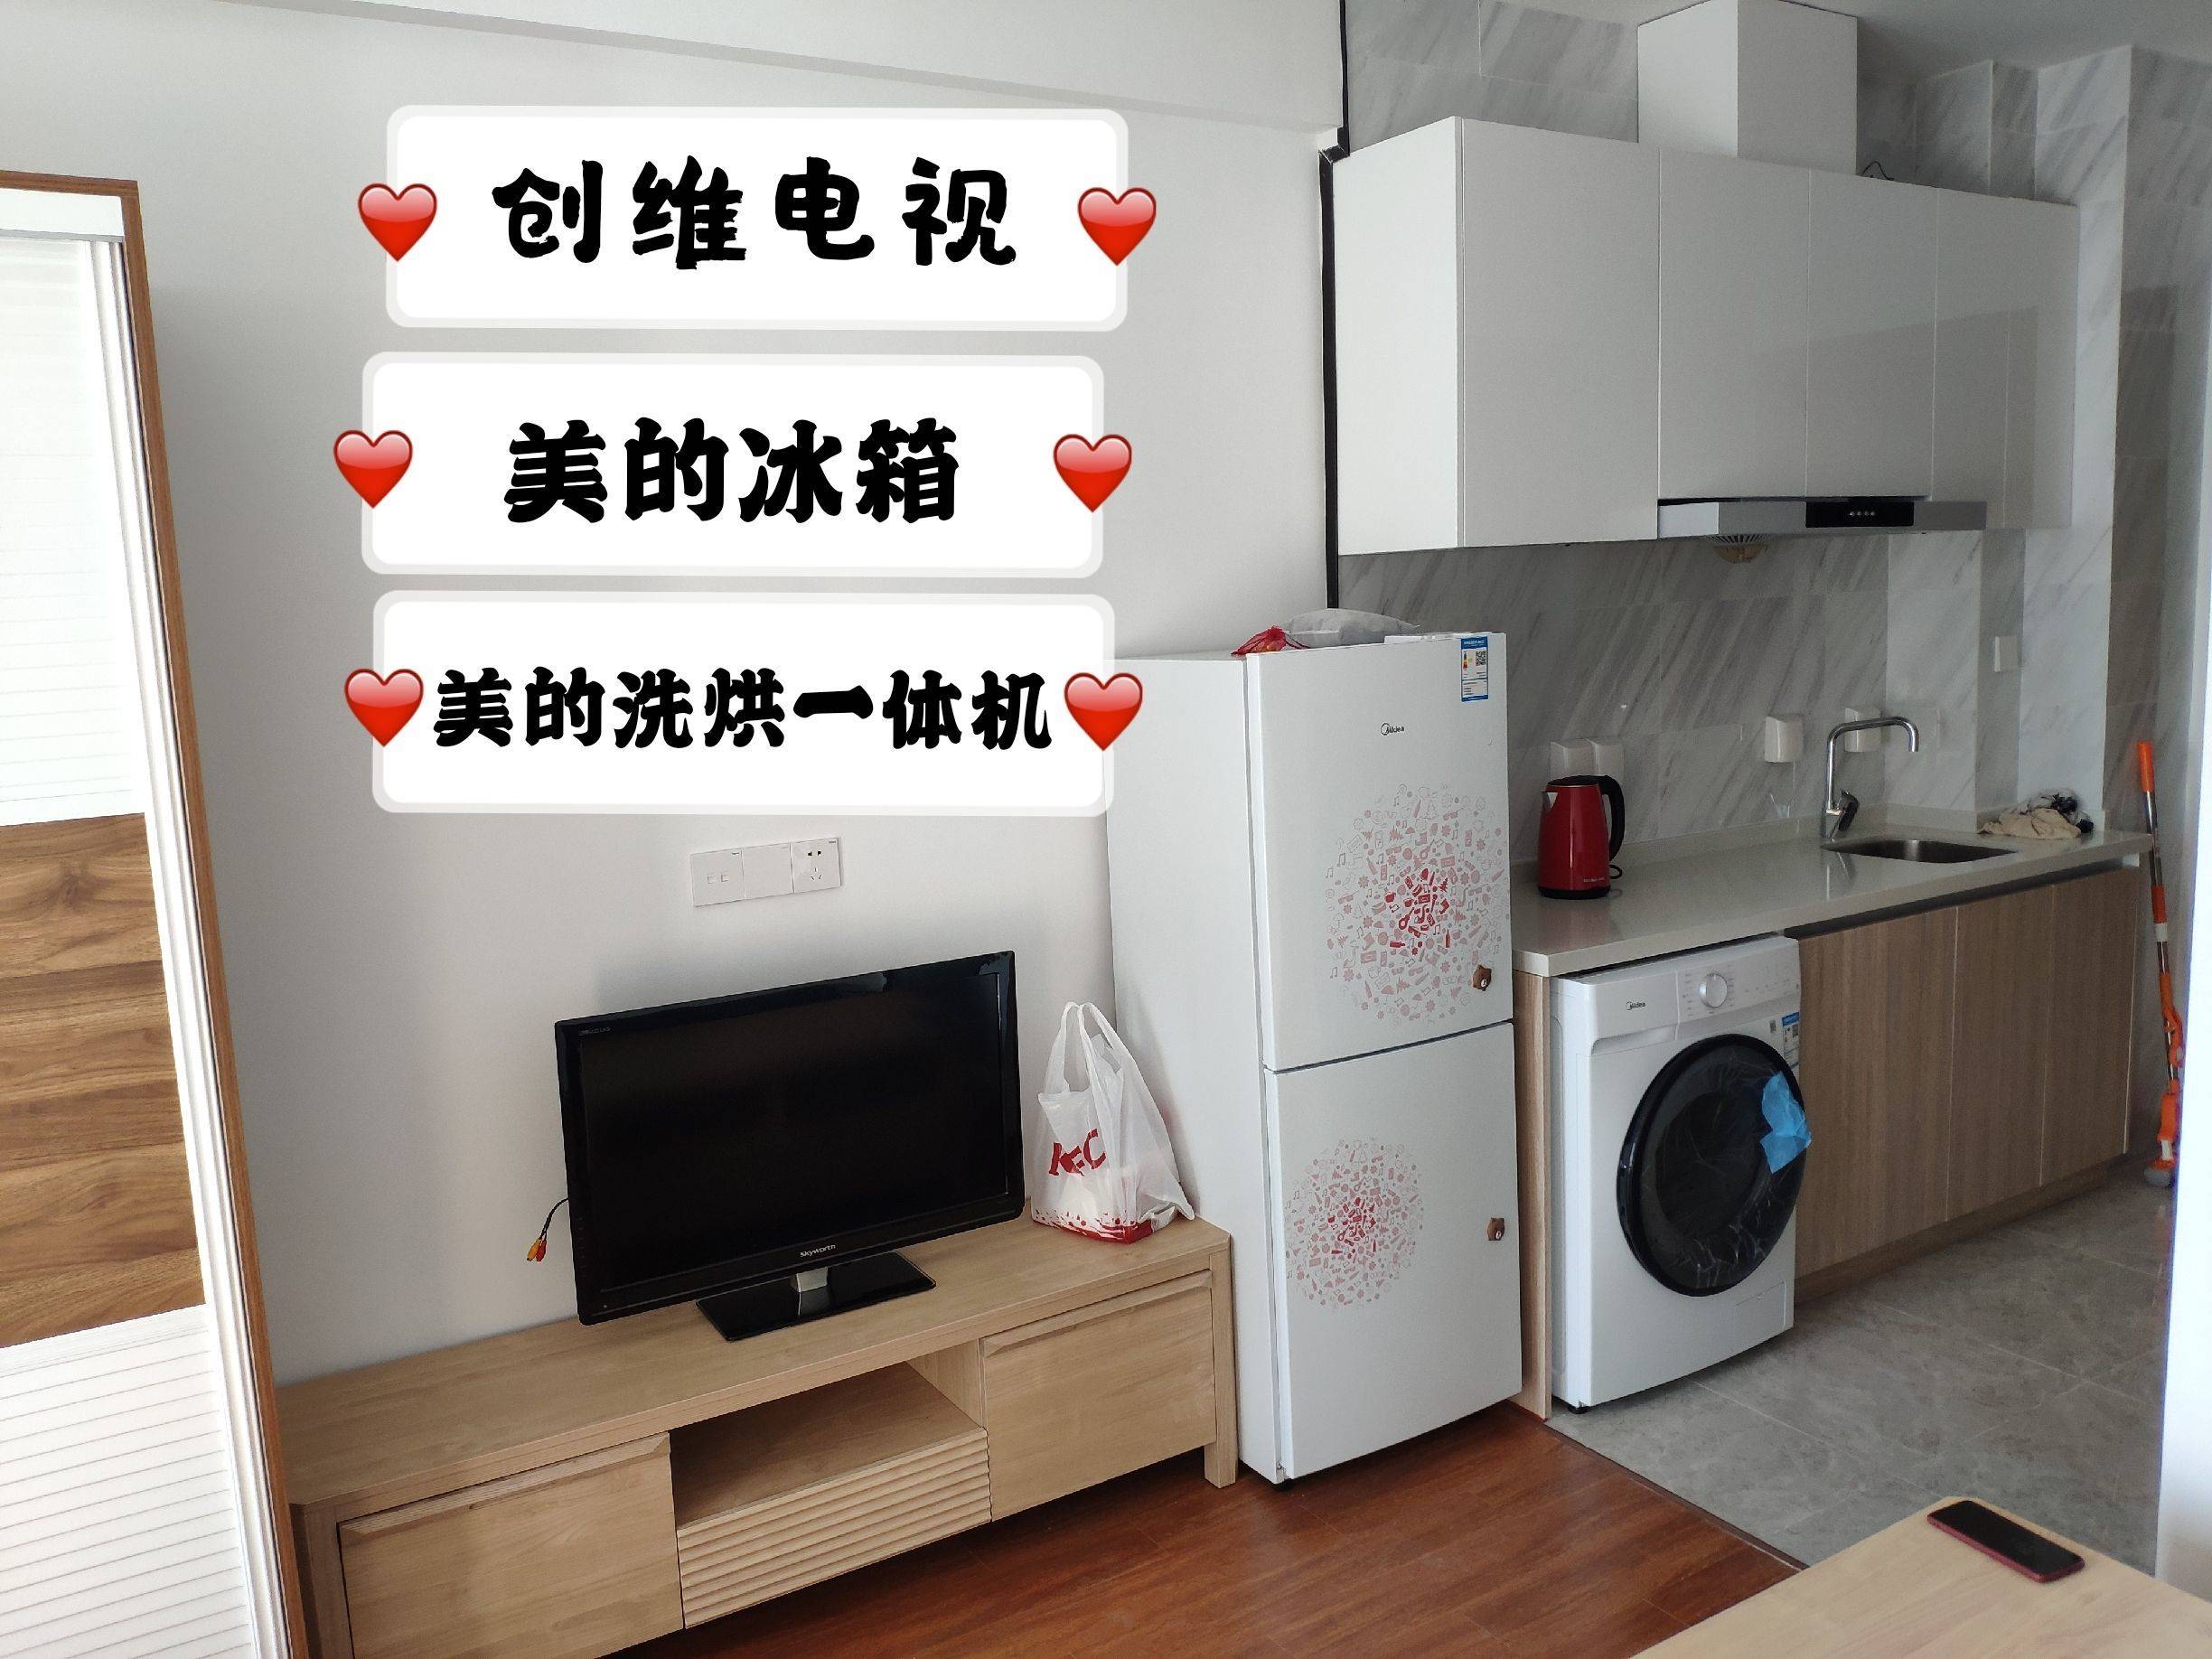 Suzhou-Xiangcheng-Cozy Home,Clean&Comfy,No Gender Limit,Hustle & Bustle,“Friends”,Chilled,LGBTQ Friendly,Pet Friendly